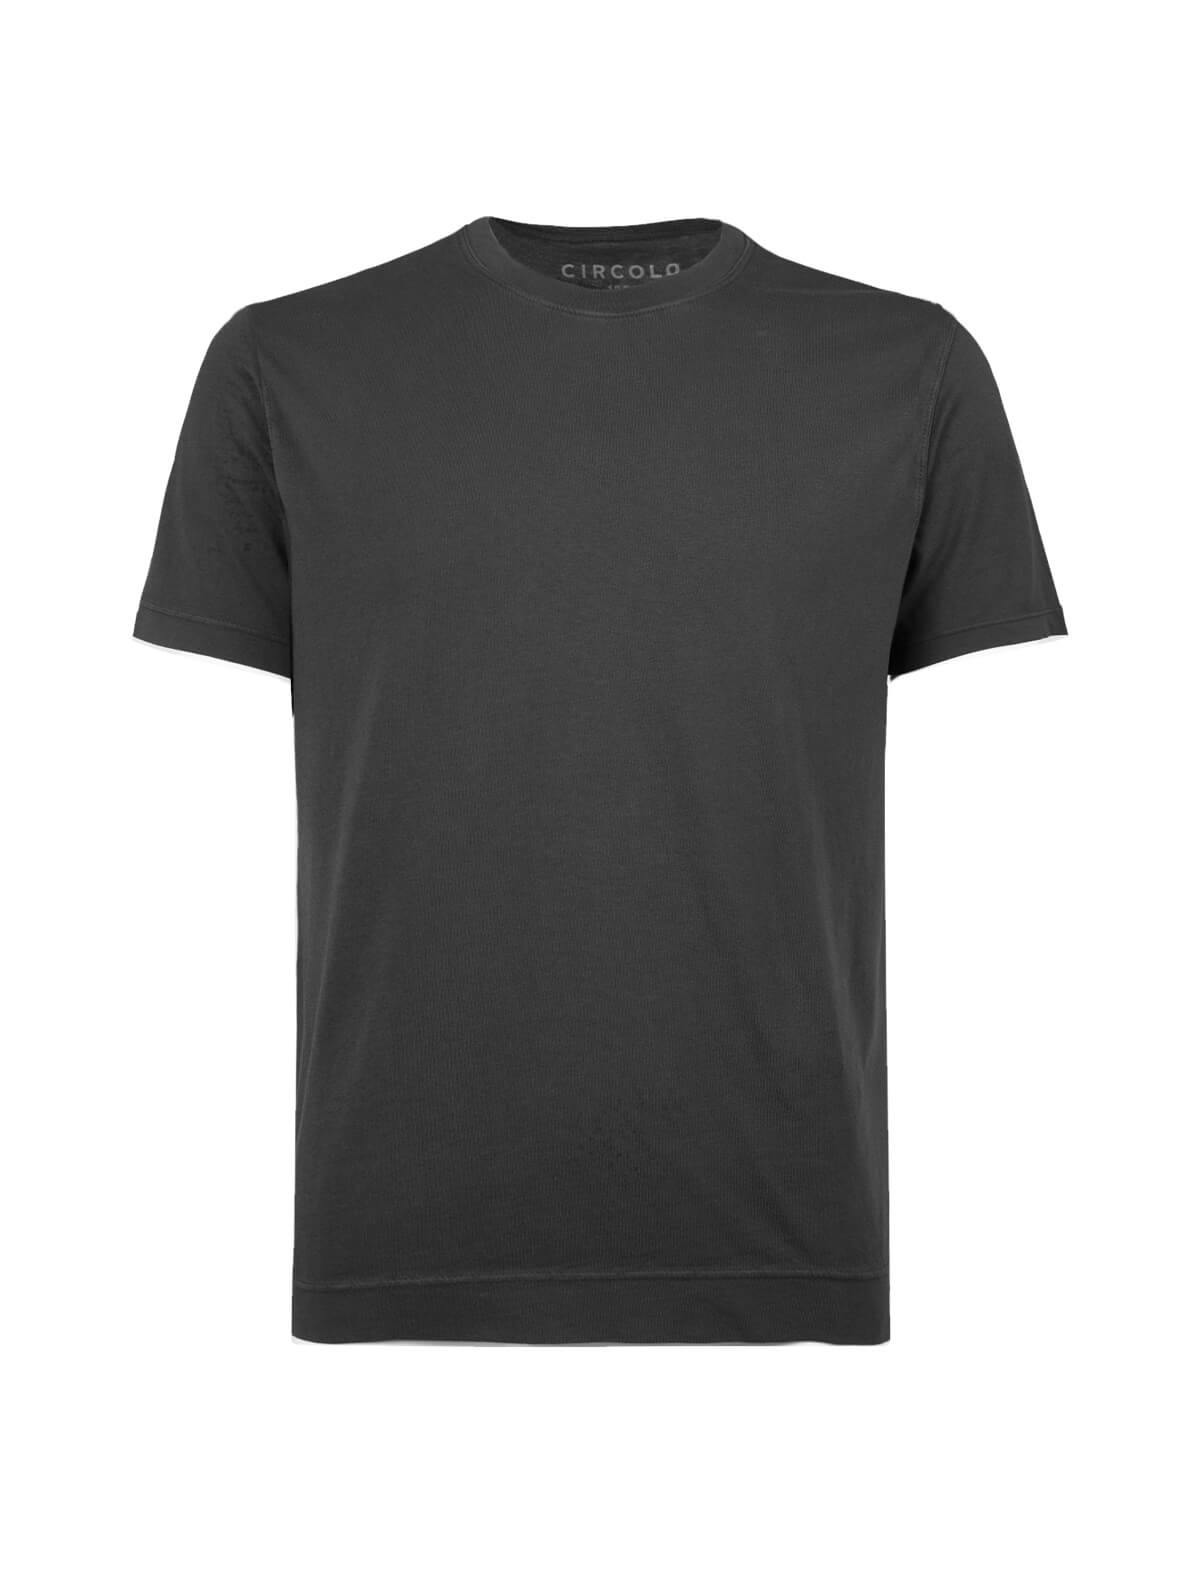 CIRCOLO 1901 Crew Neck Cotton T-Shirt in Black | CLOSET Singapore